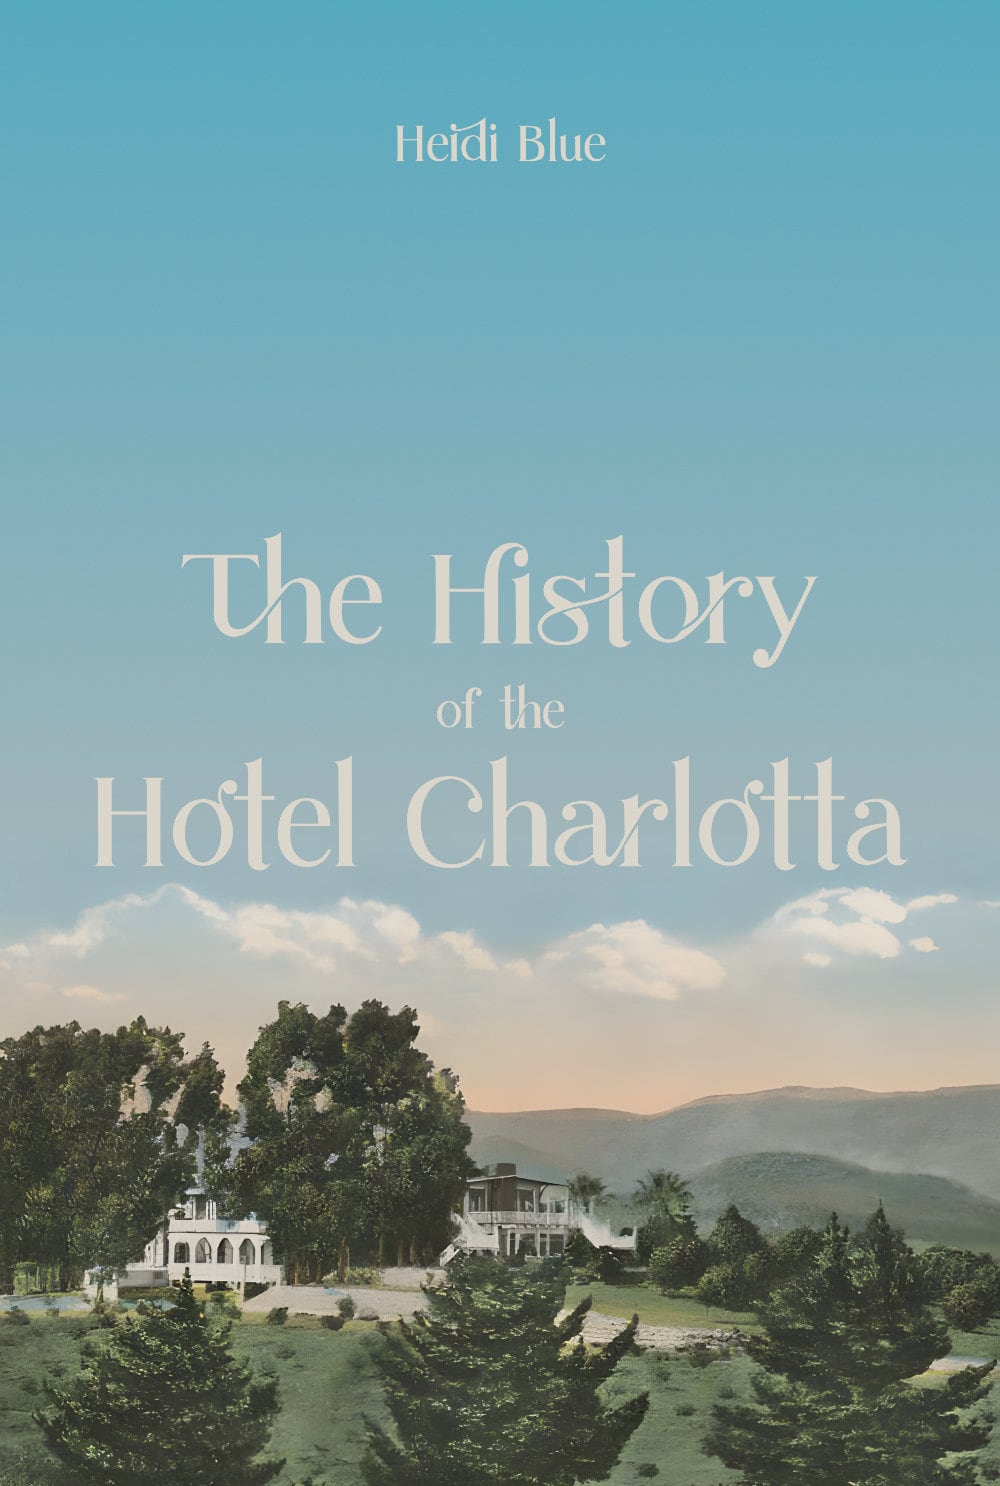 The History of the Hotel Charlotta